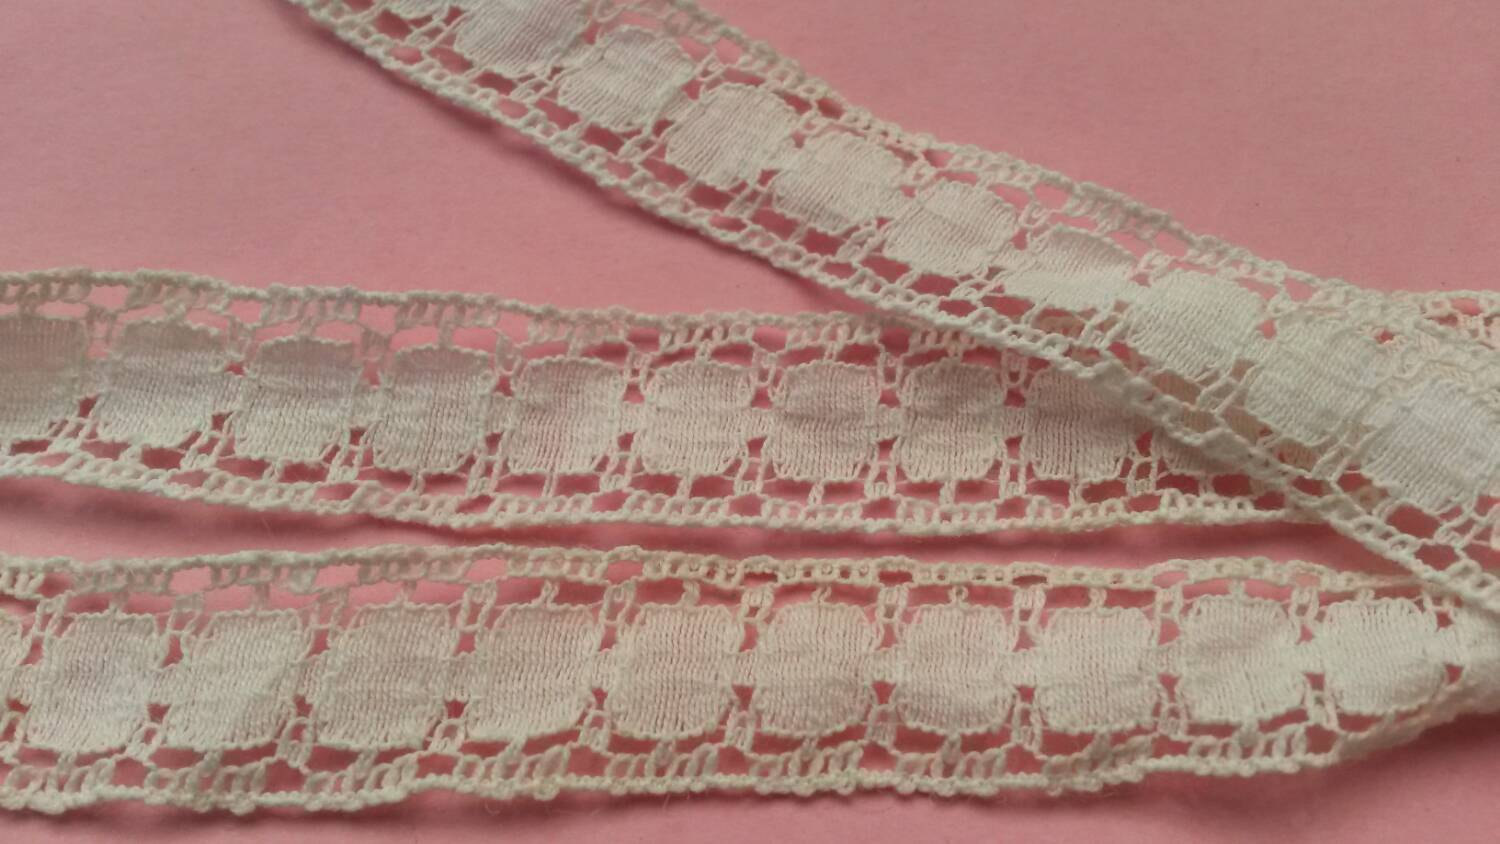 2 Yards WHITE cotton antique vintage lace trim, embroidery trim 6/10 inch wide